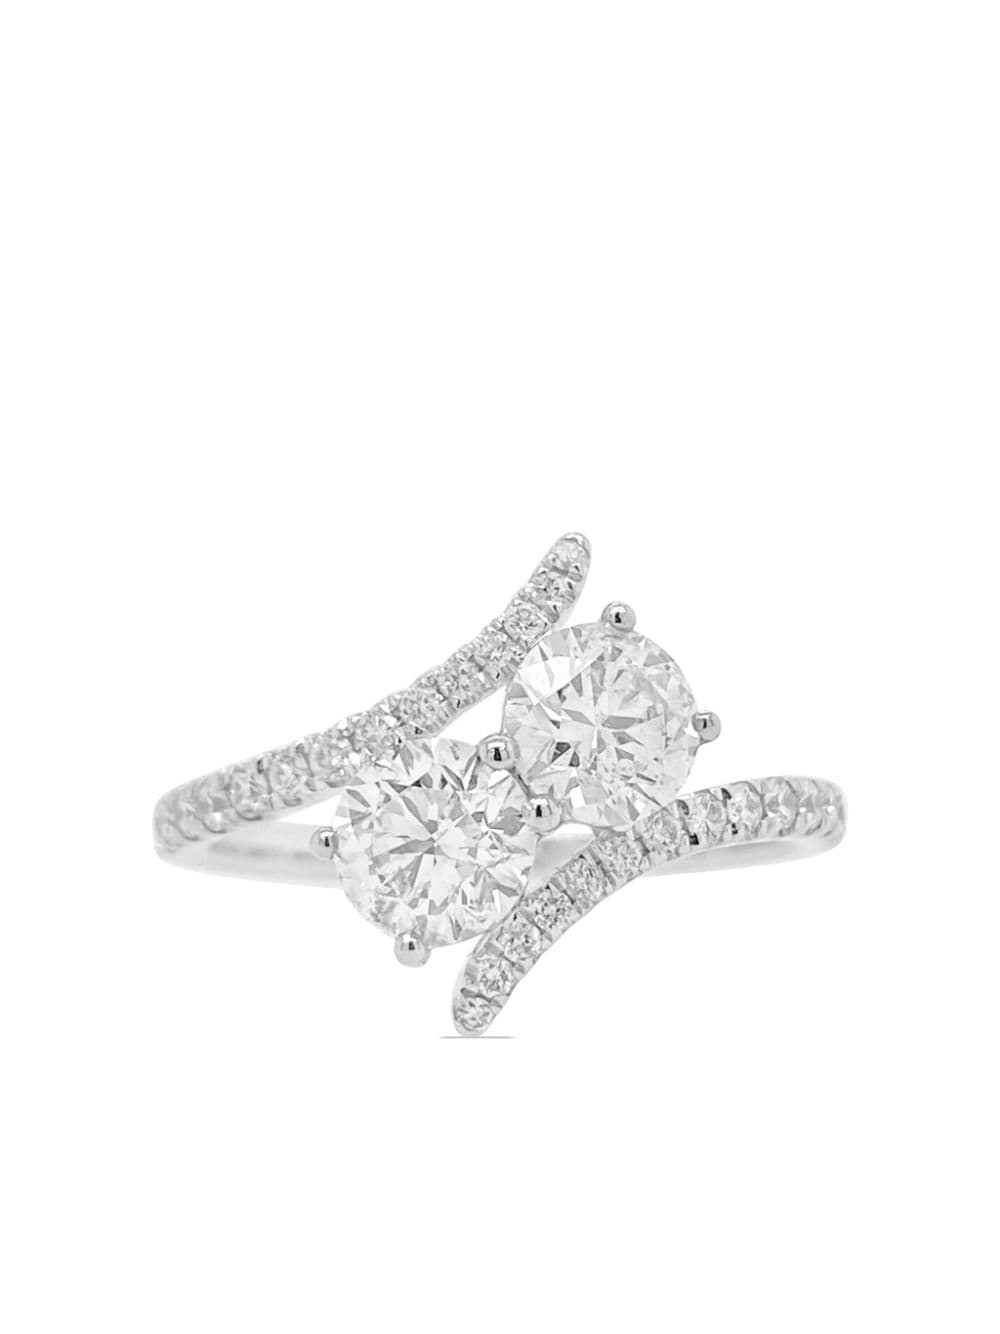 HYT Jewelry platinum white diamond ring - Silver von HYT Jewelry